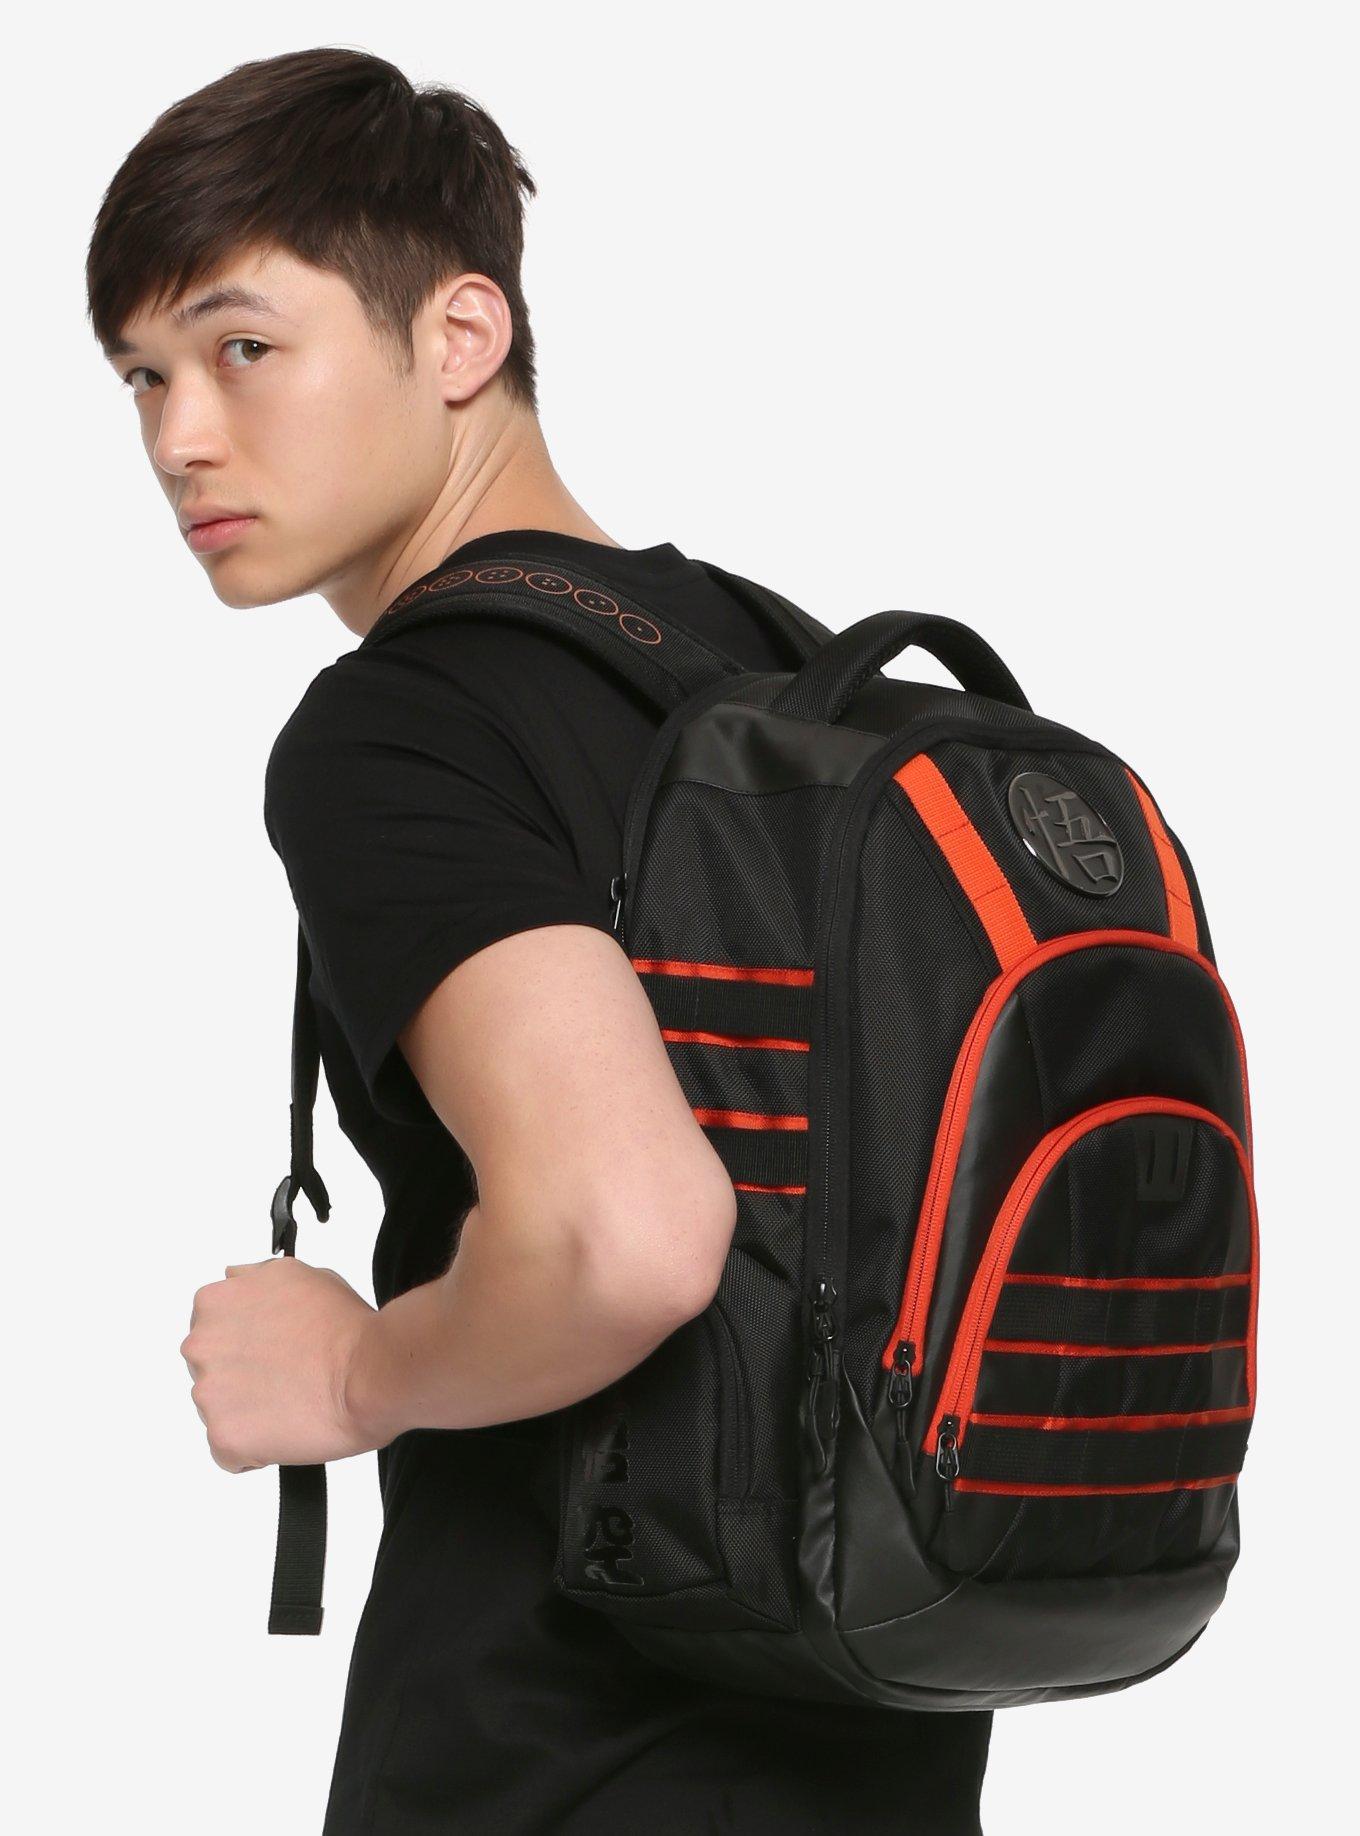 orange dragon ball z backpack